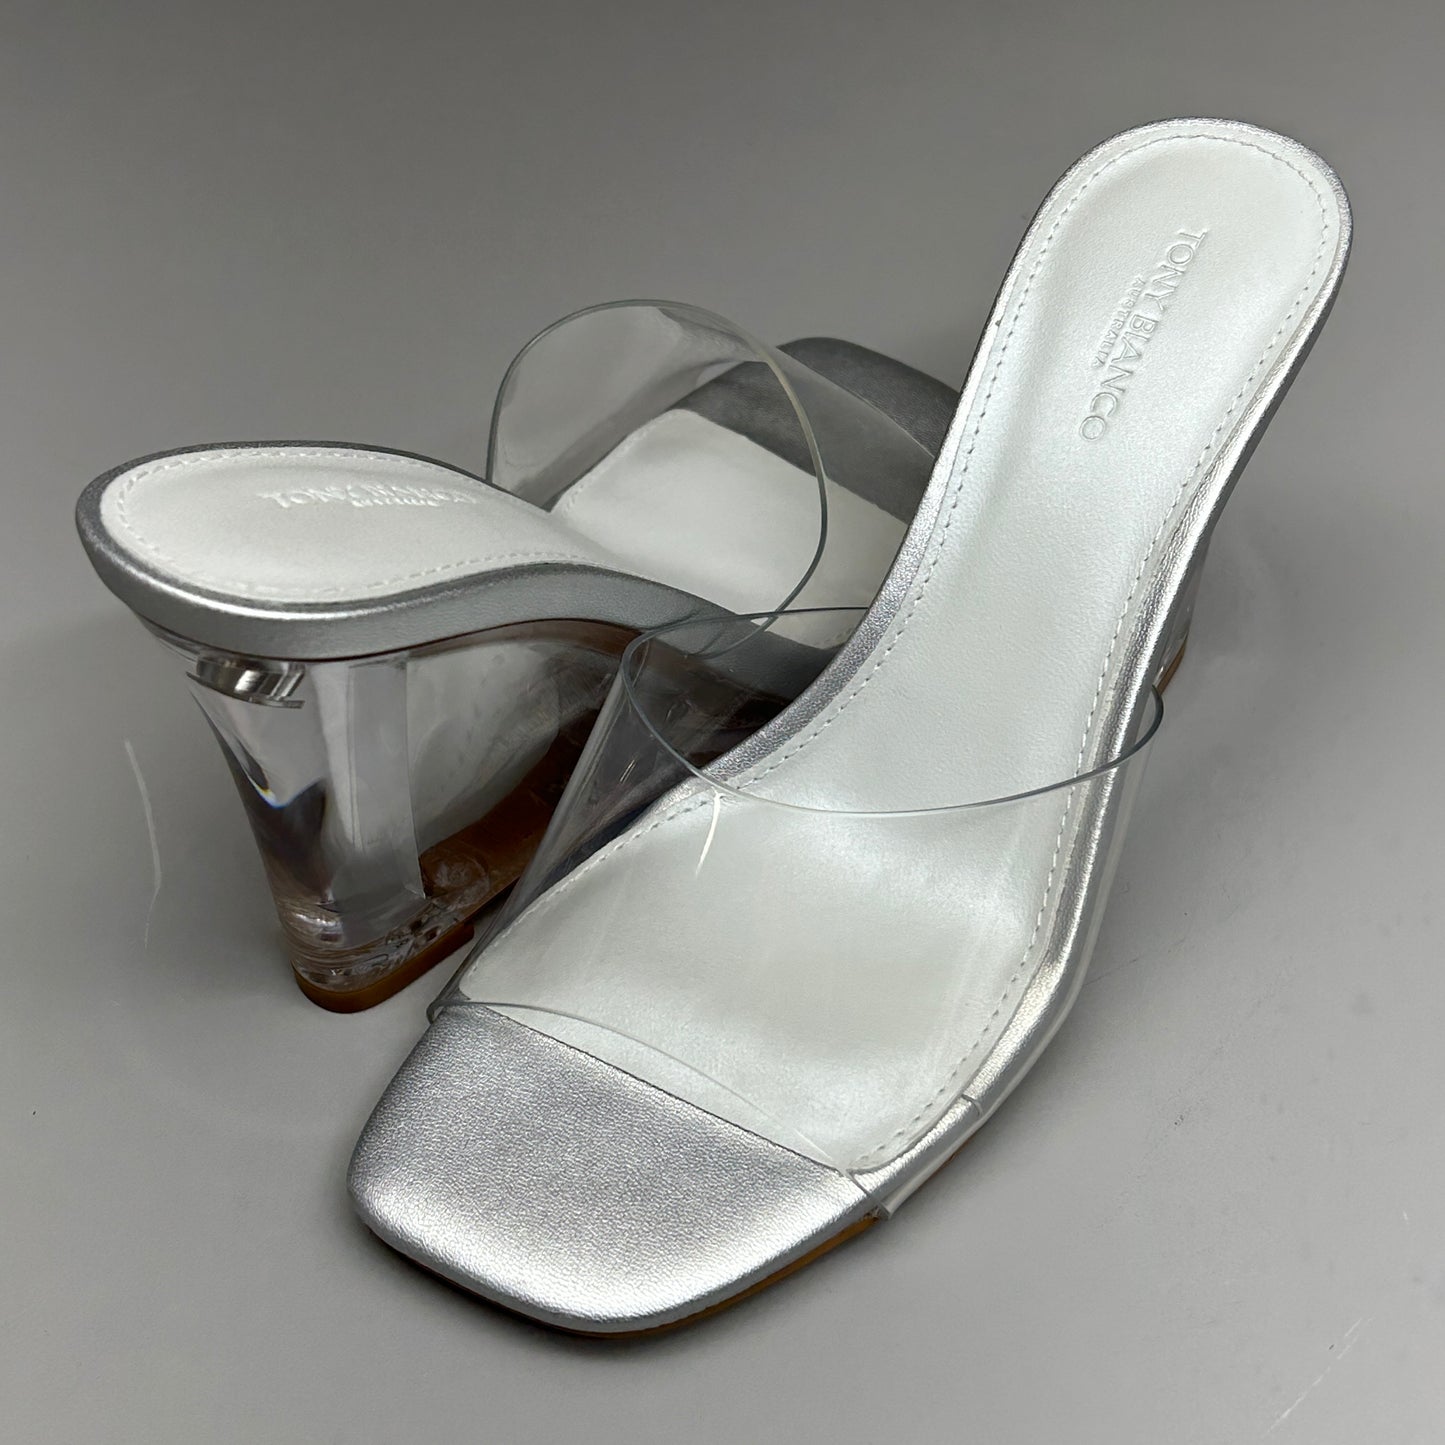 TONY BIANCO Alessi Clear Vinylite/Silver Wedges Women's Heels Sz 7.5 (New)